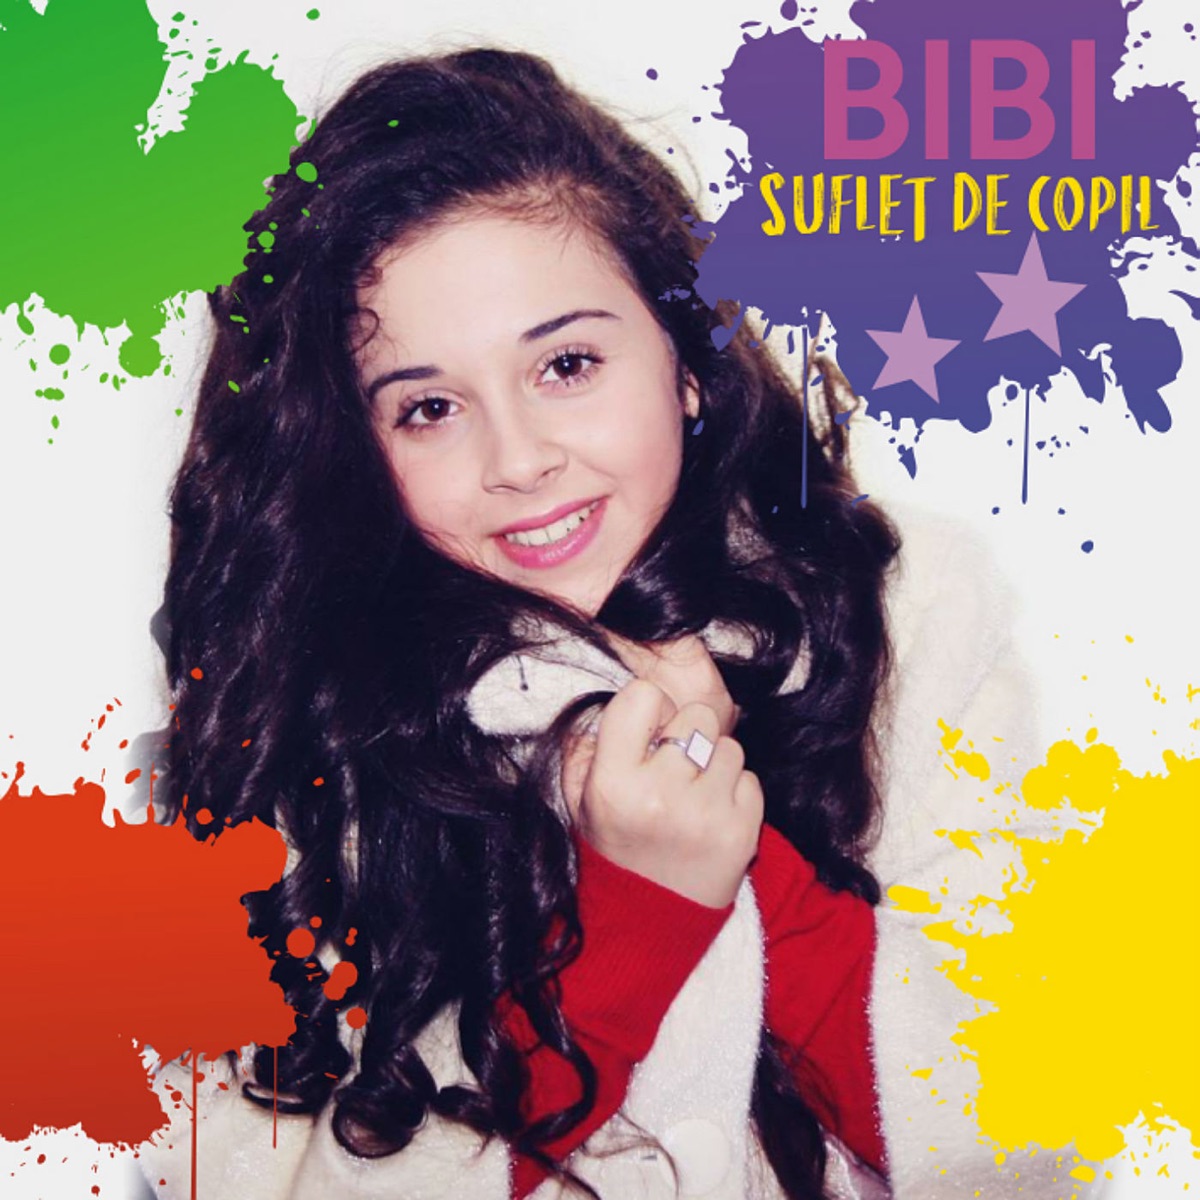 Suflet De Copil - Single by BiBi on Apple Music